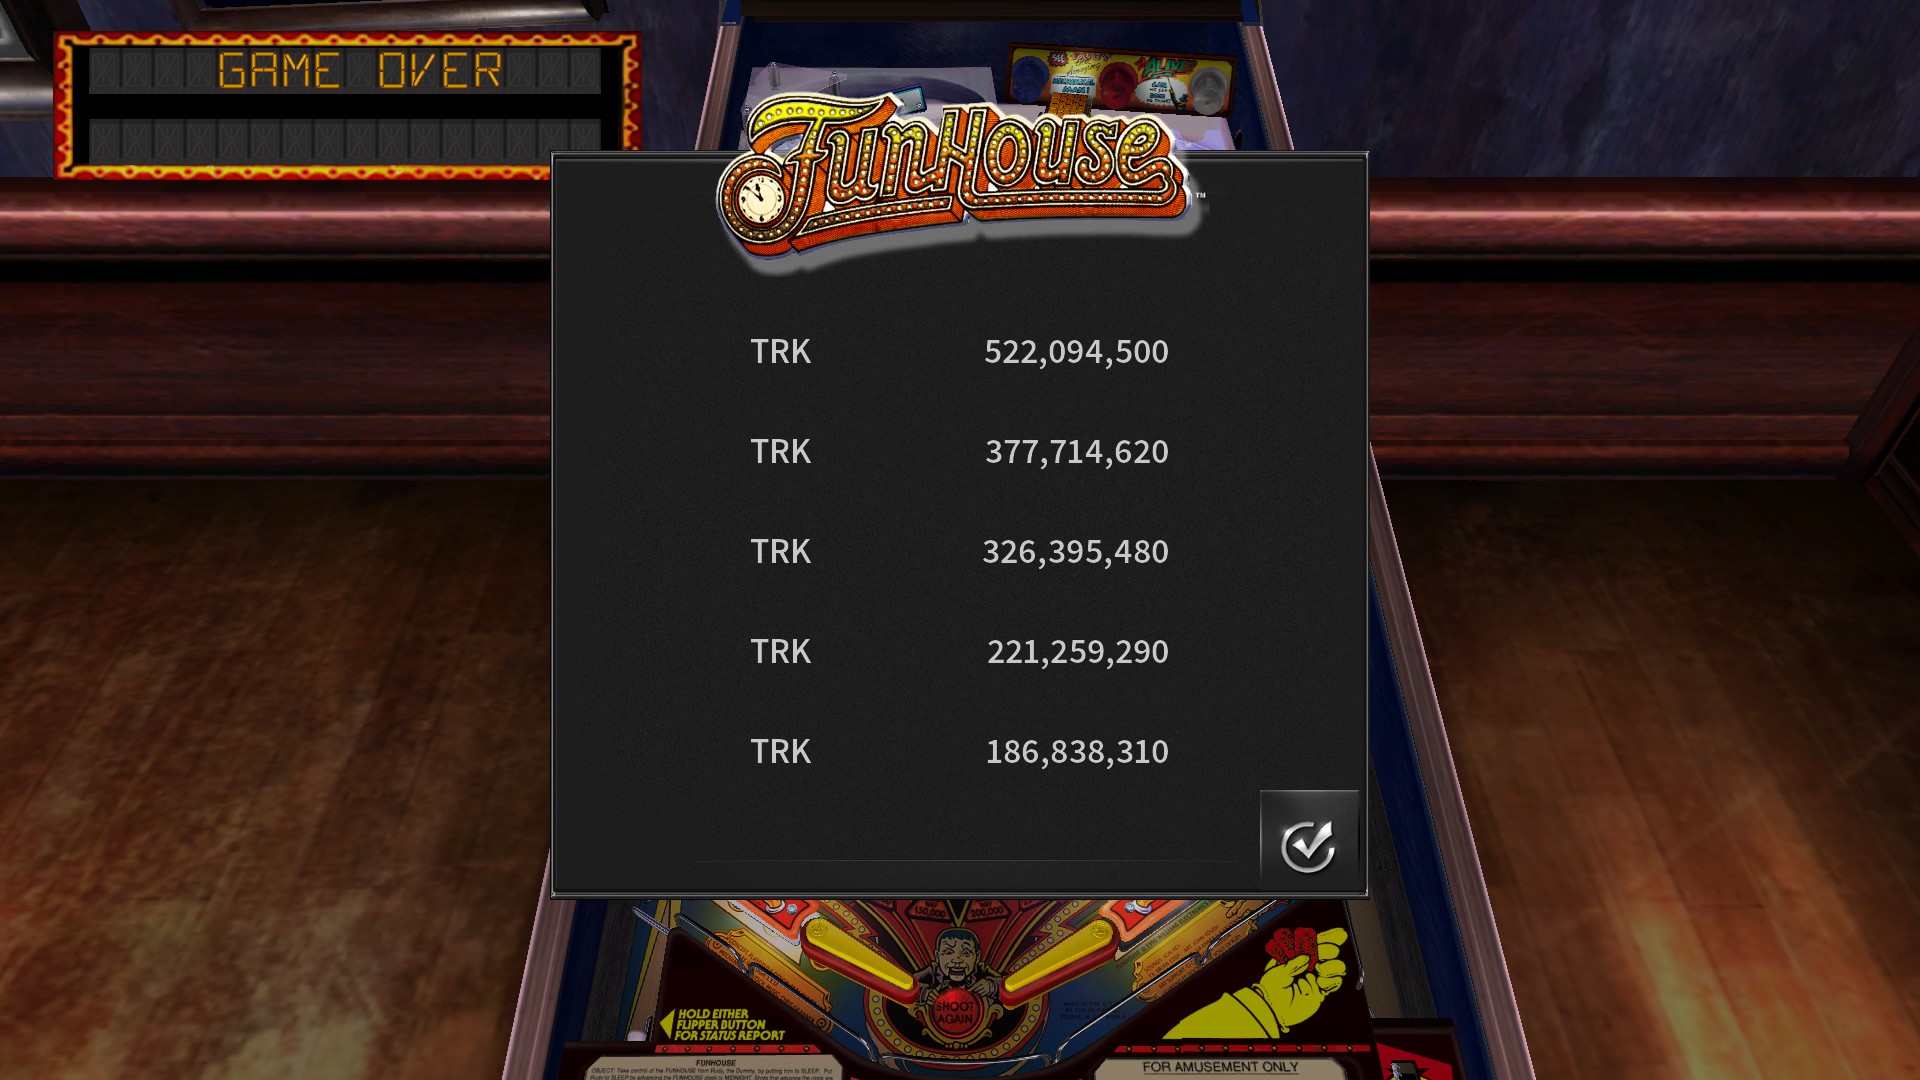 TheTrickster: Pinball Arcade: Funhouse (PC) 522,094,500 points on 2017-02-26 19:46:25